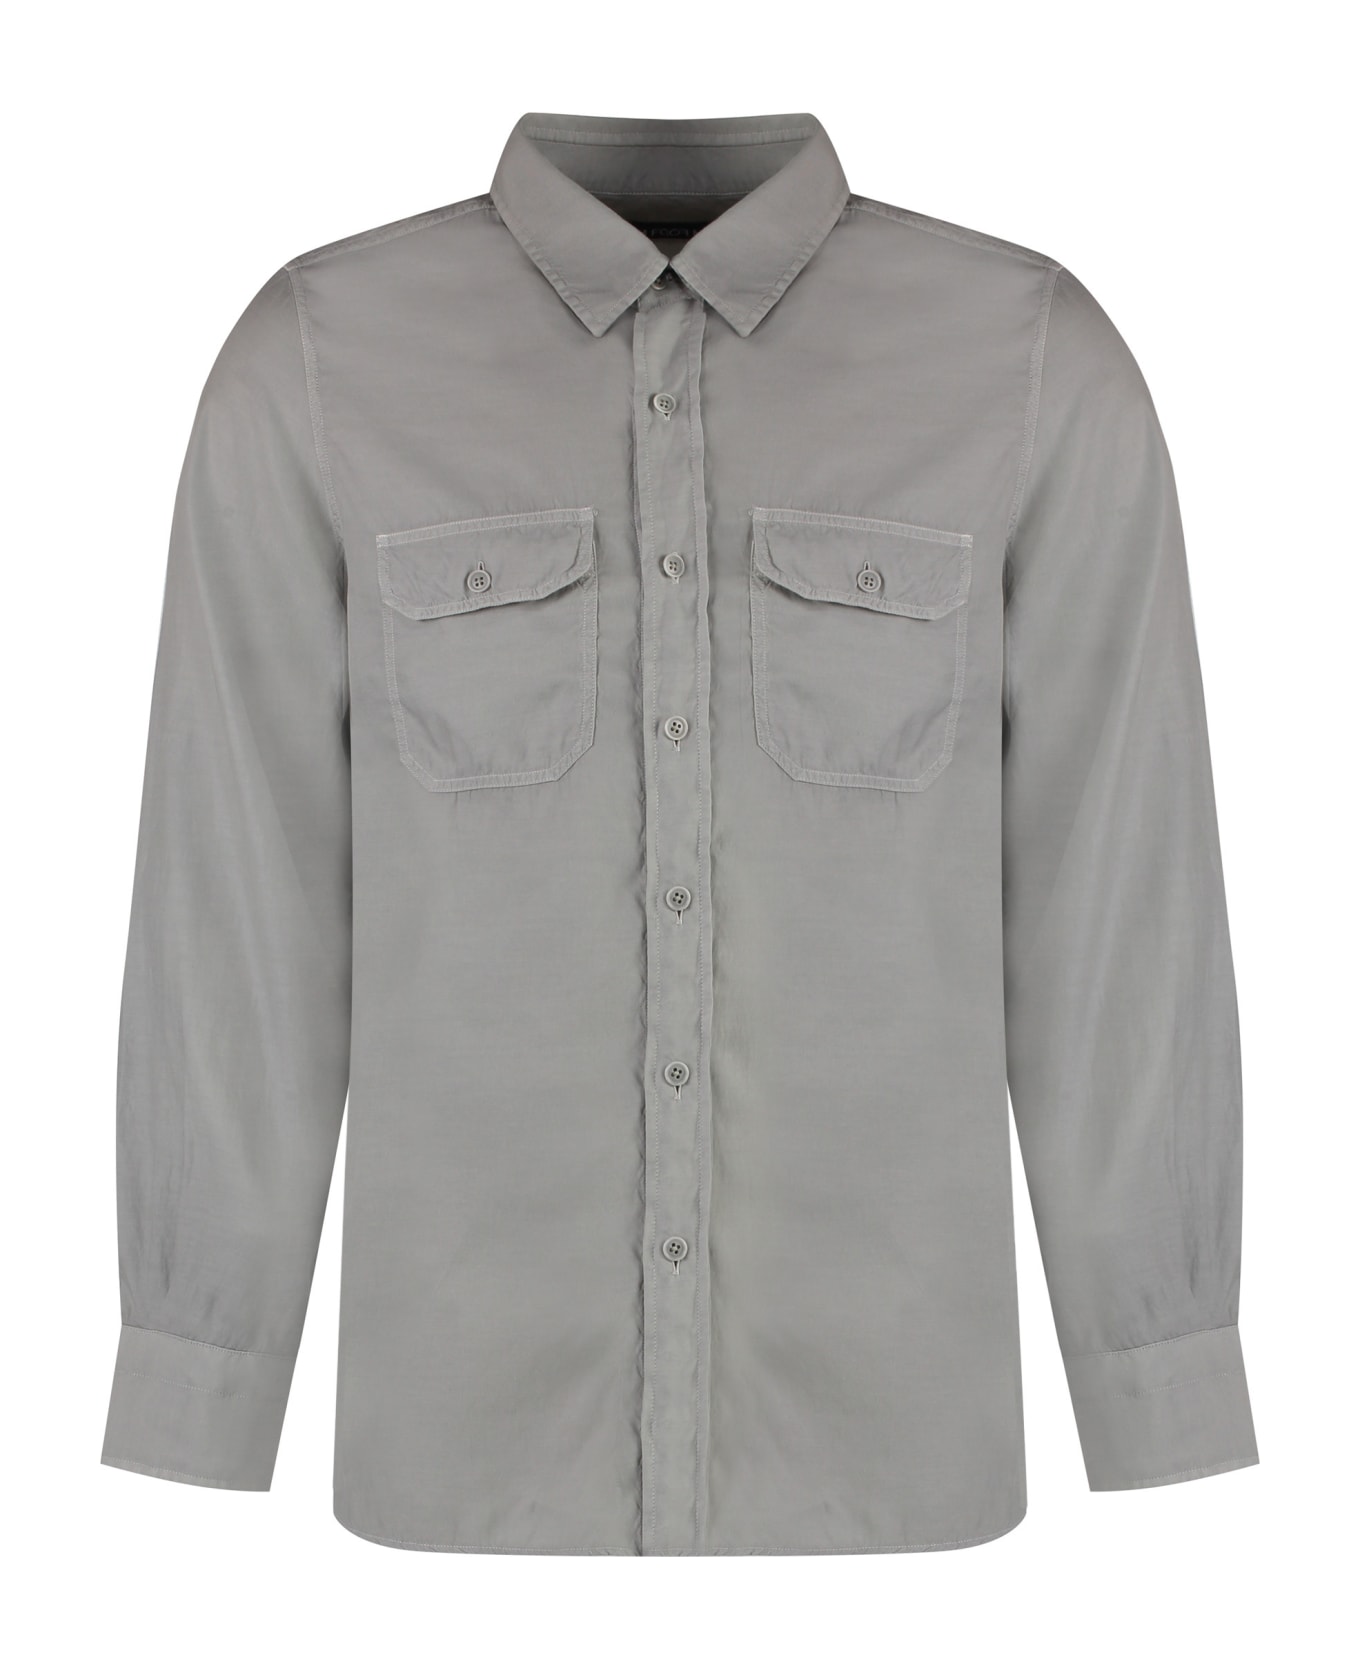 Tom Ford Cotton Twill Shirt - grey